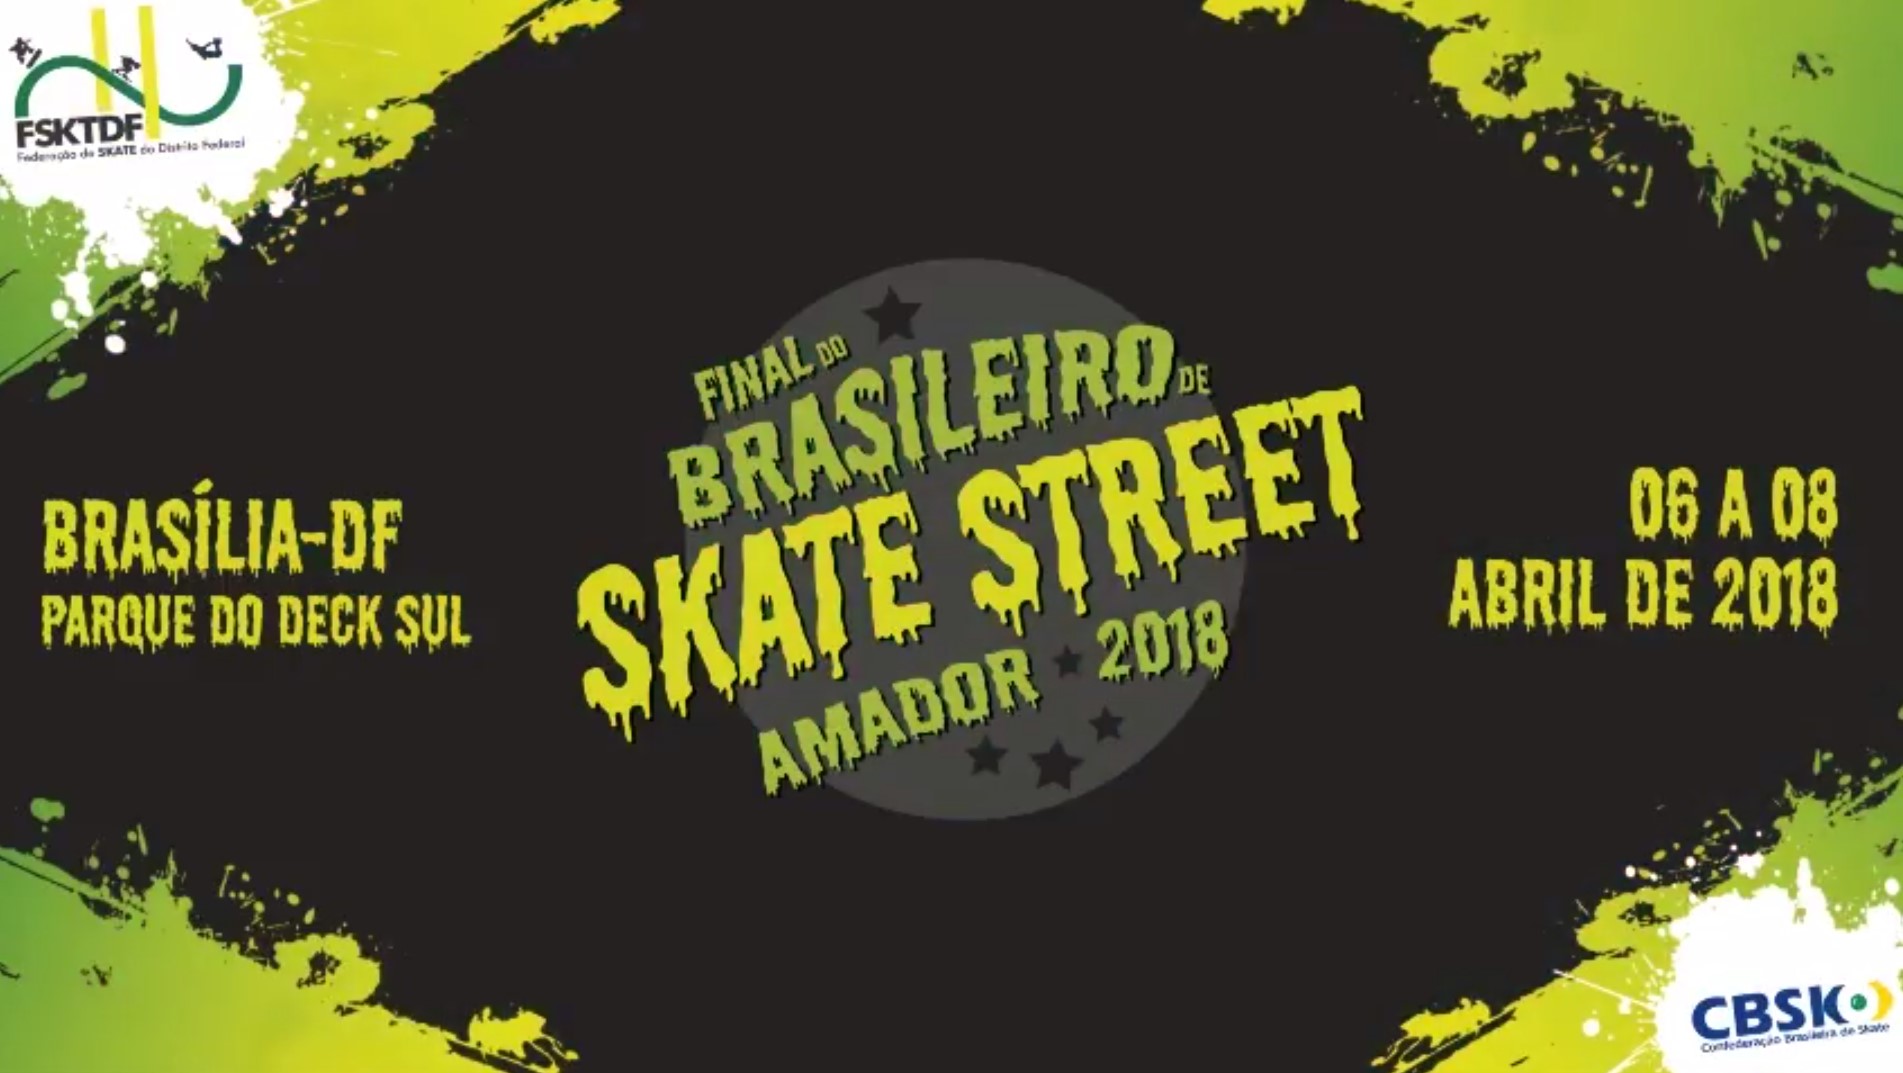 Brasileiro de Skate Street Amador